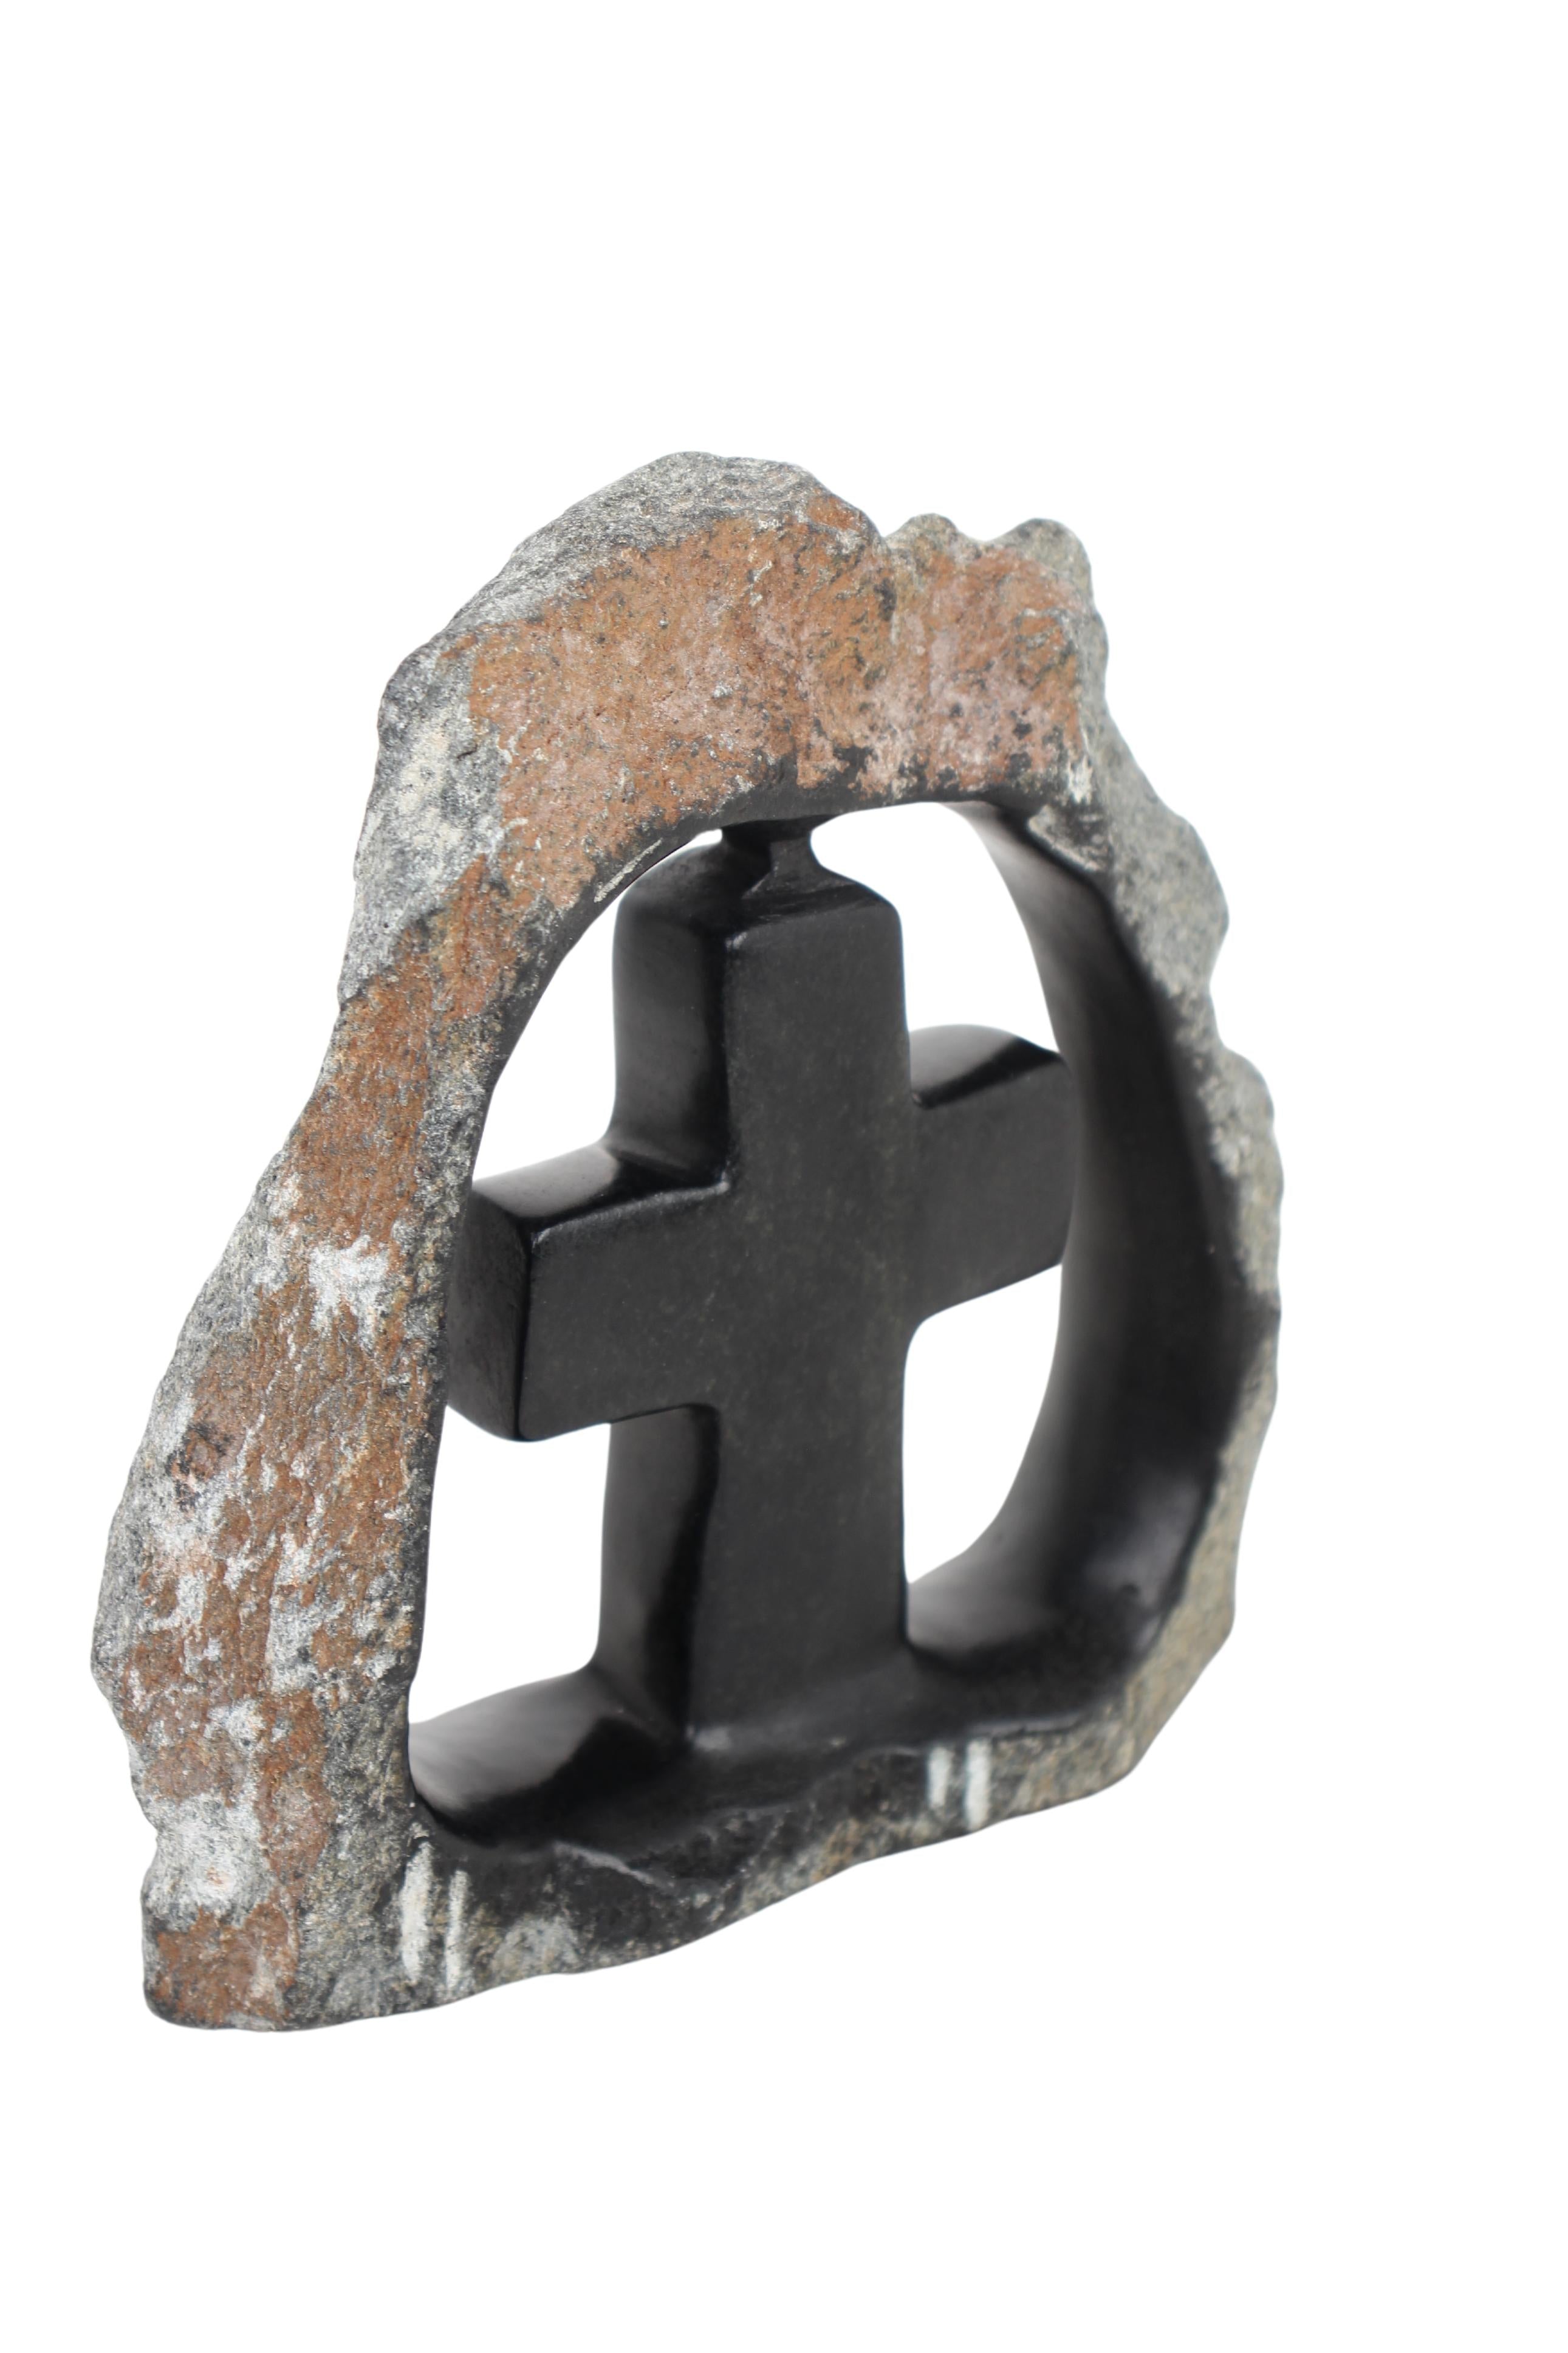 Shona Tribe Serpentine Stone Crosses ~5.9" Tall (New 2024) - Shona Stone